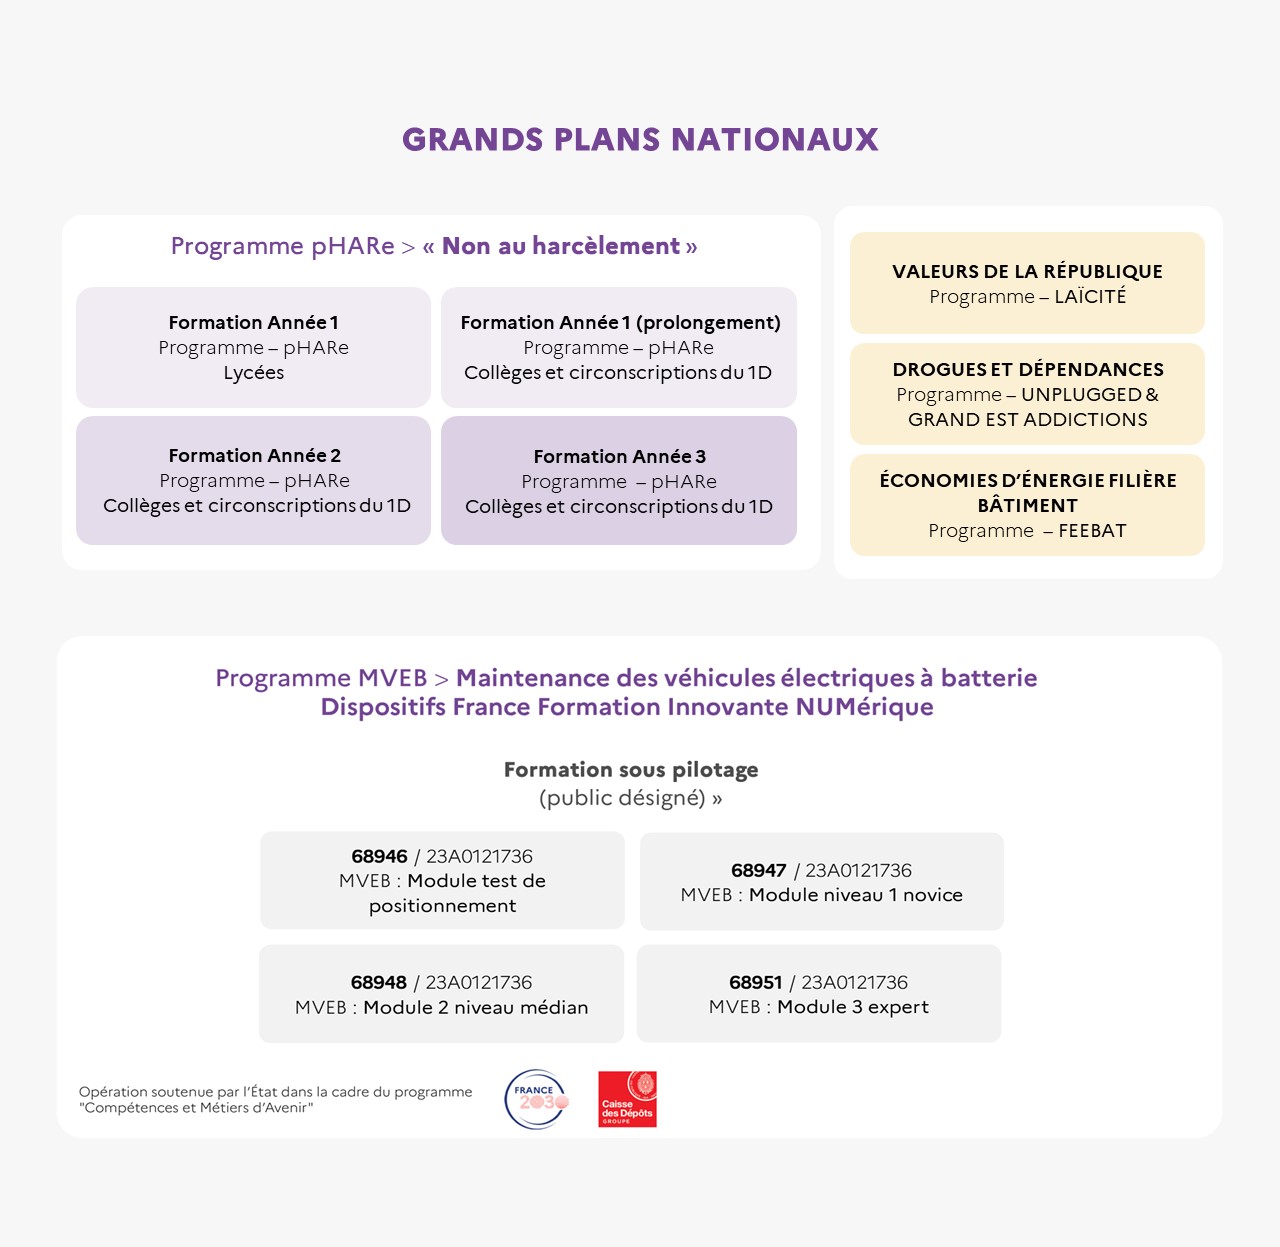 EAFC - Infographie du cycle Grands Plans Nationaux